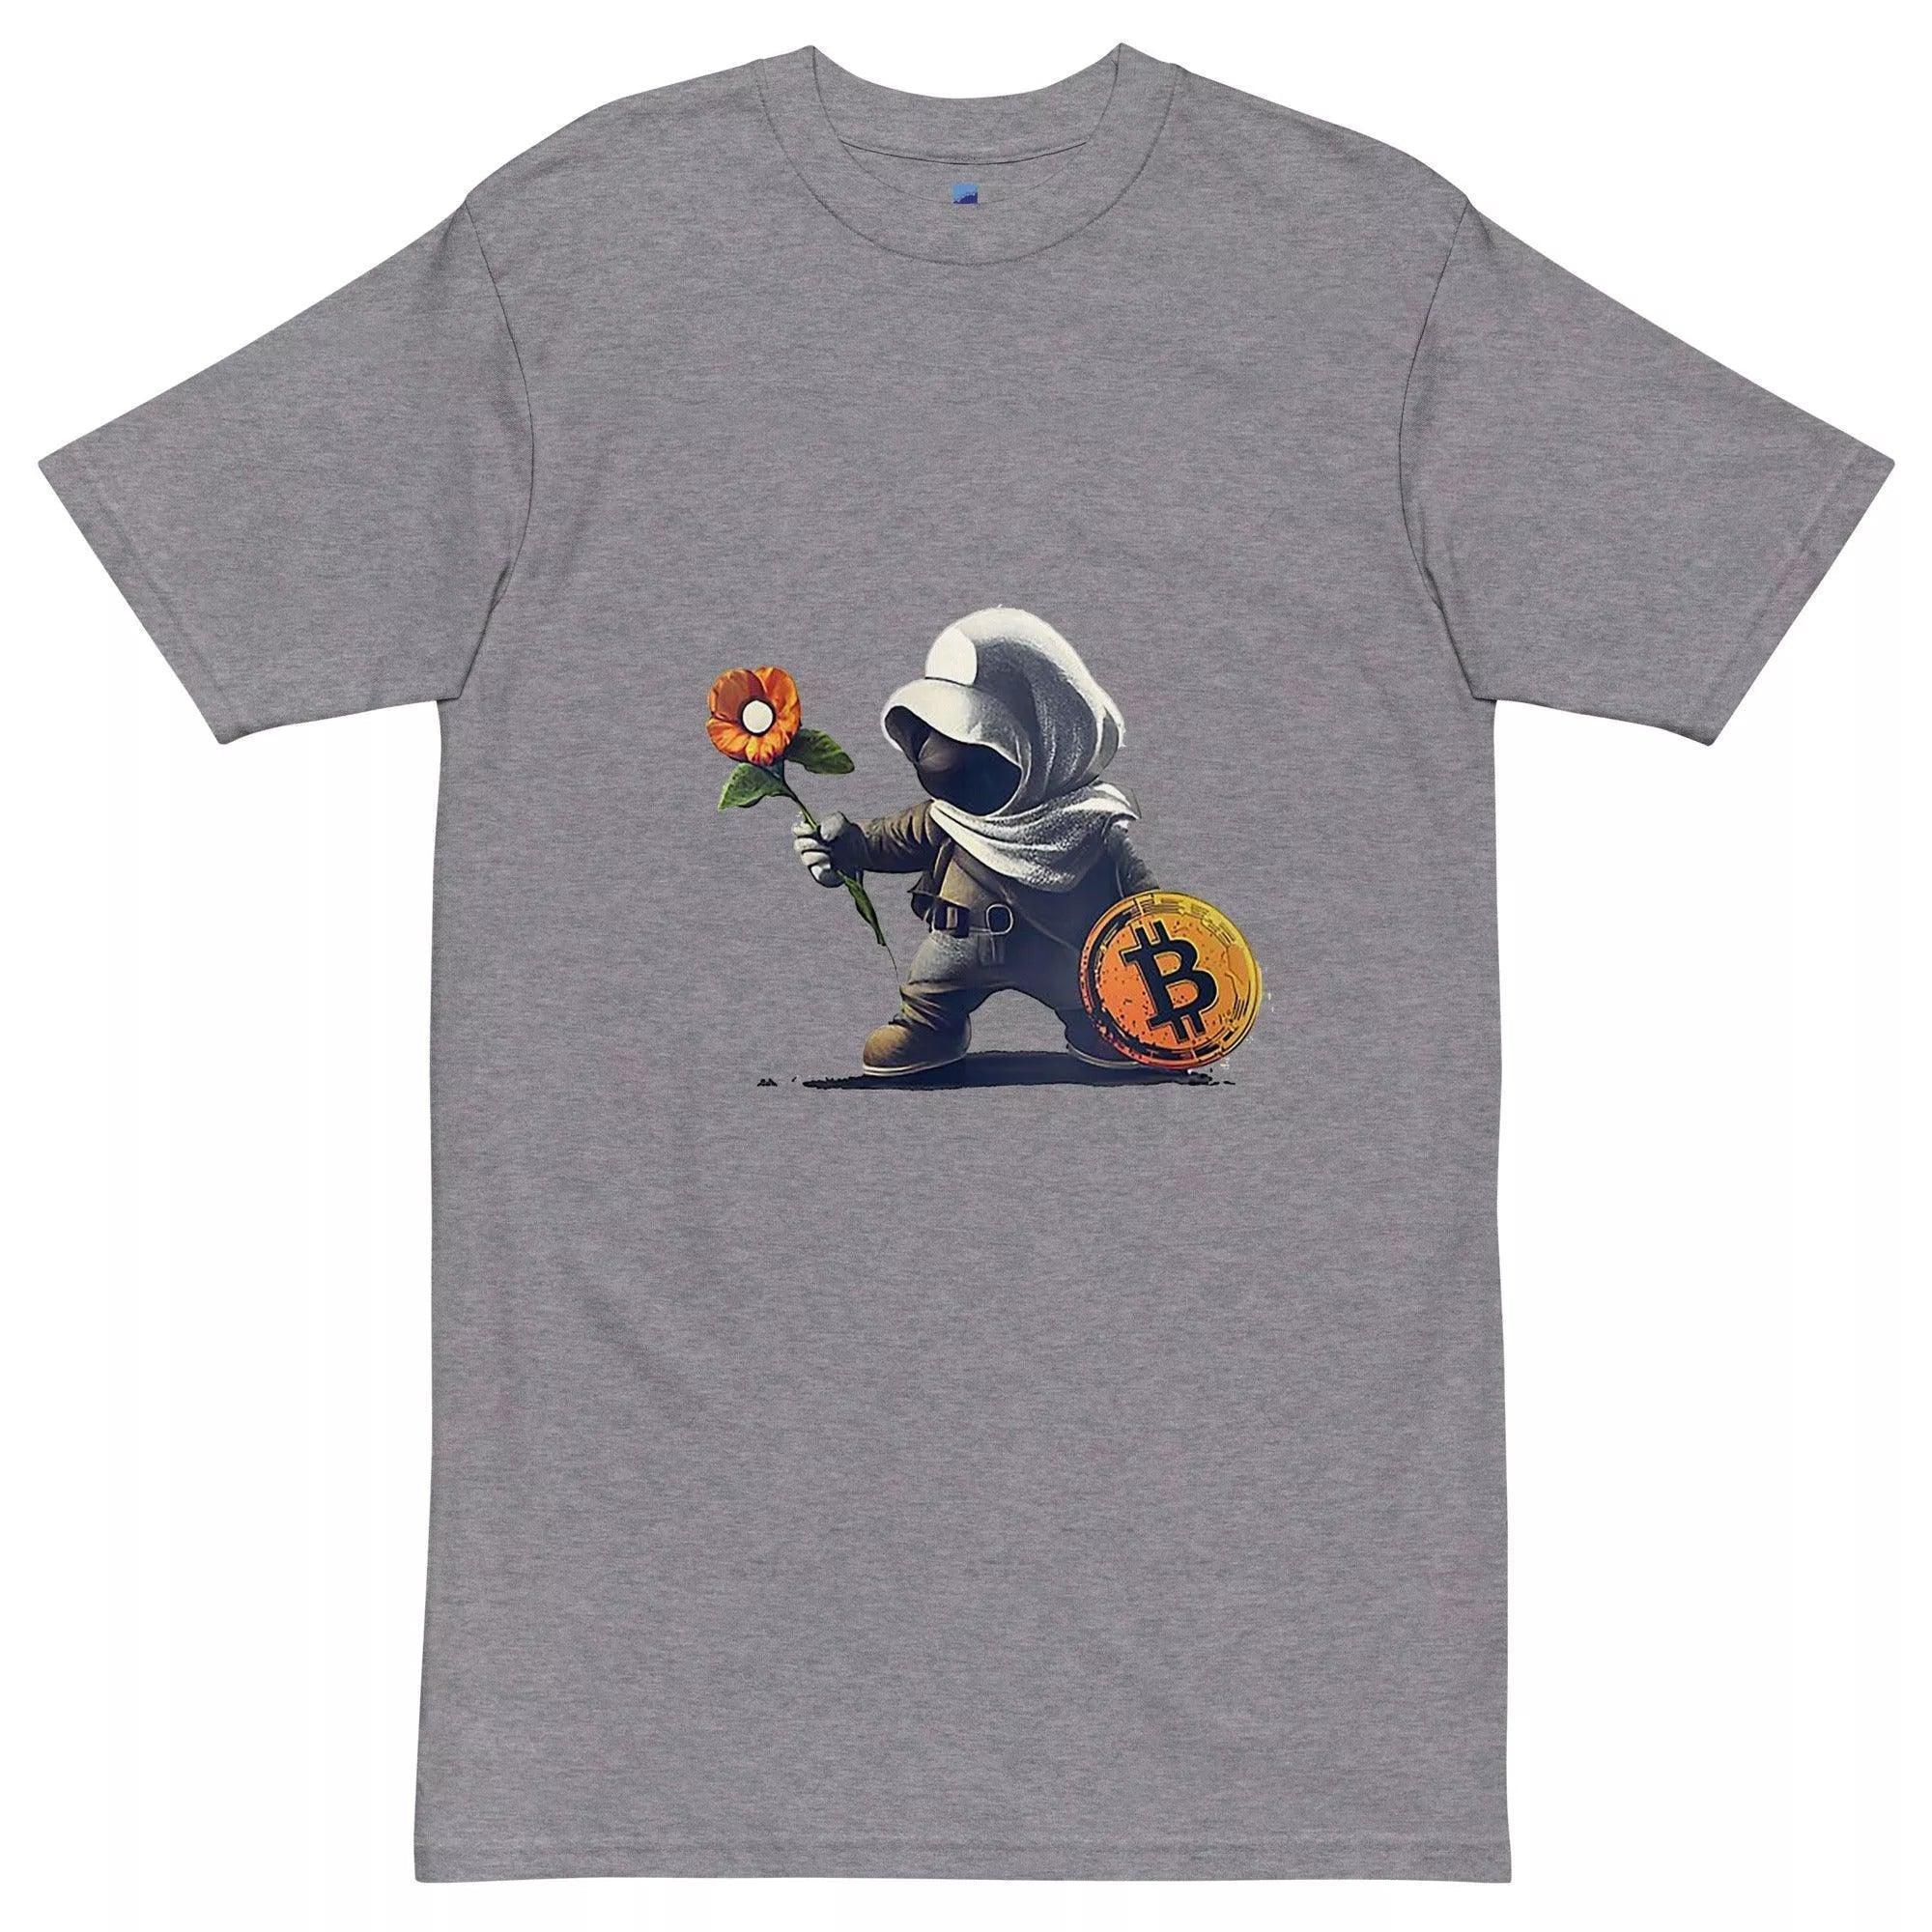 Bitcoin Samurai Warrior T-Shirt - InvestmenTees